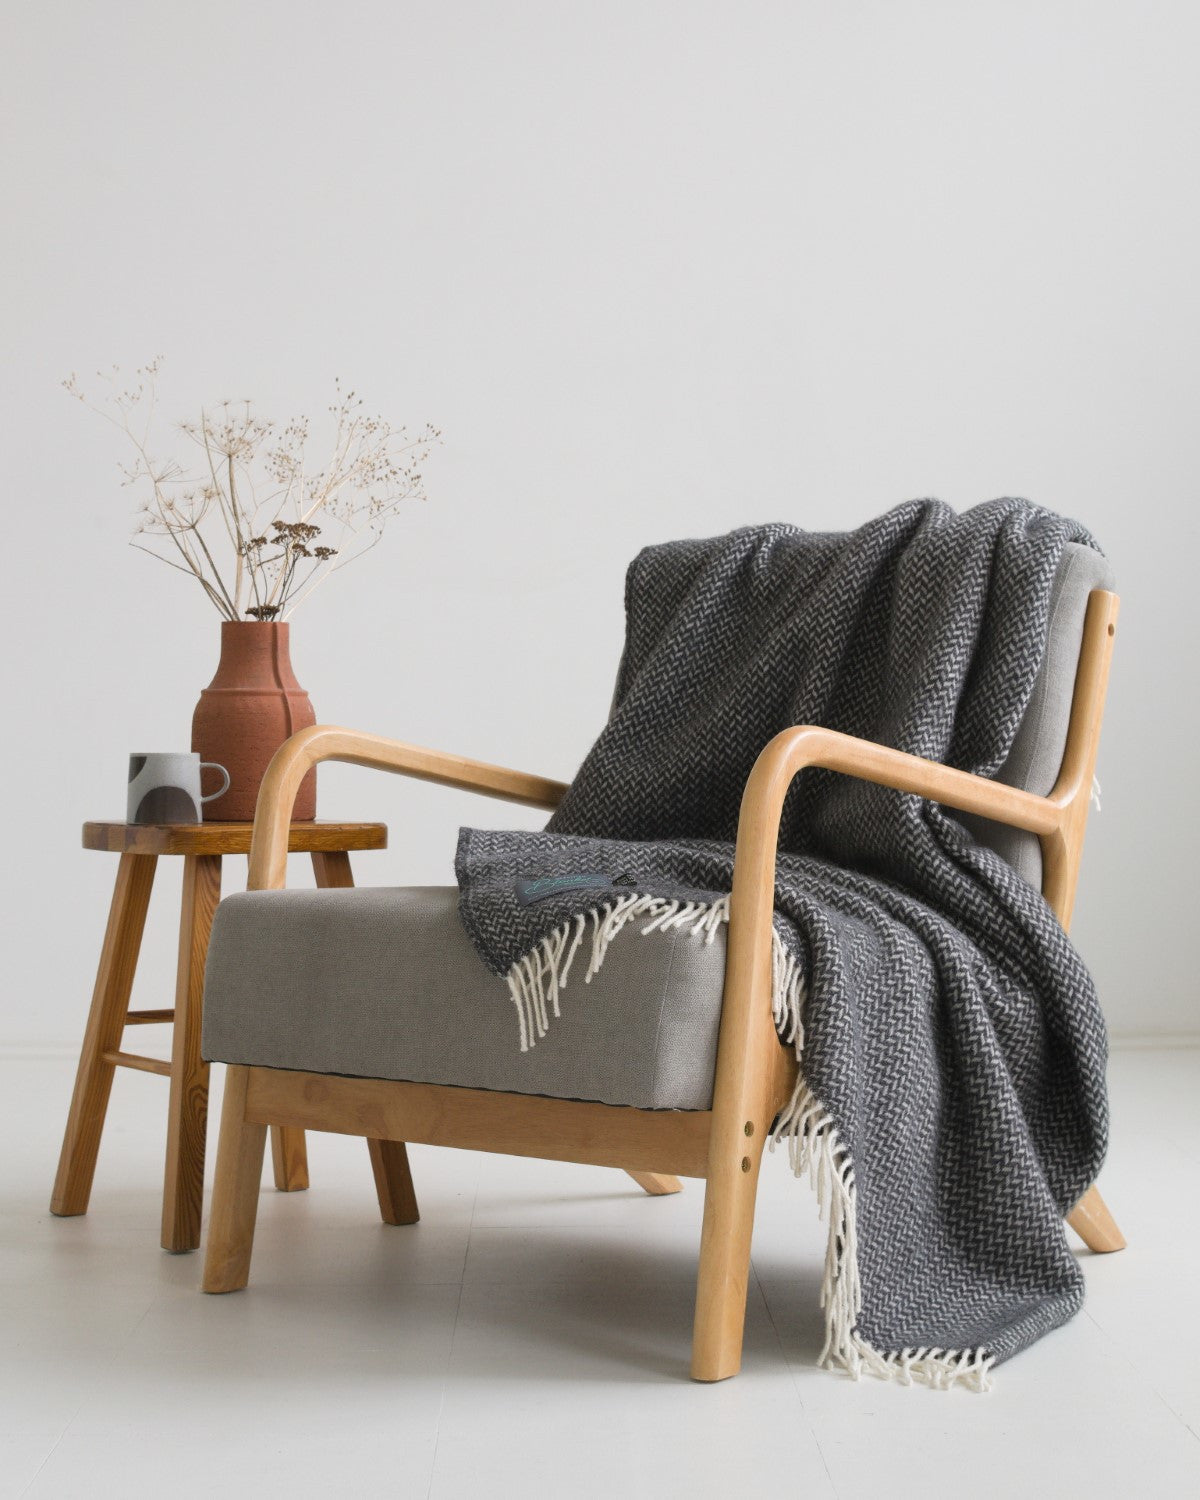 Extra large grey herringbone wool blanket draped over a lounge chair